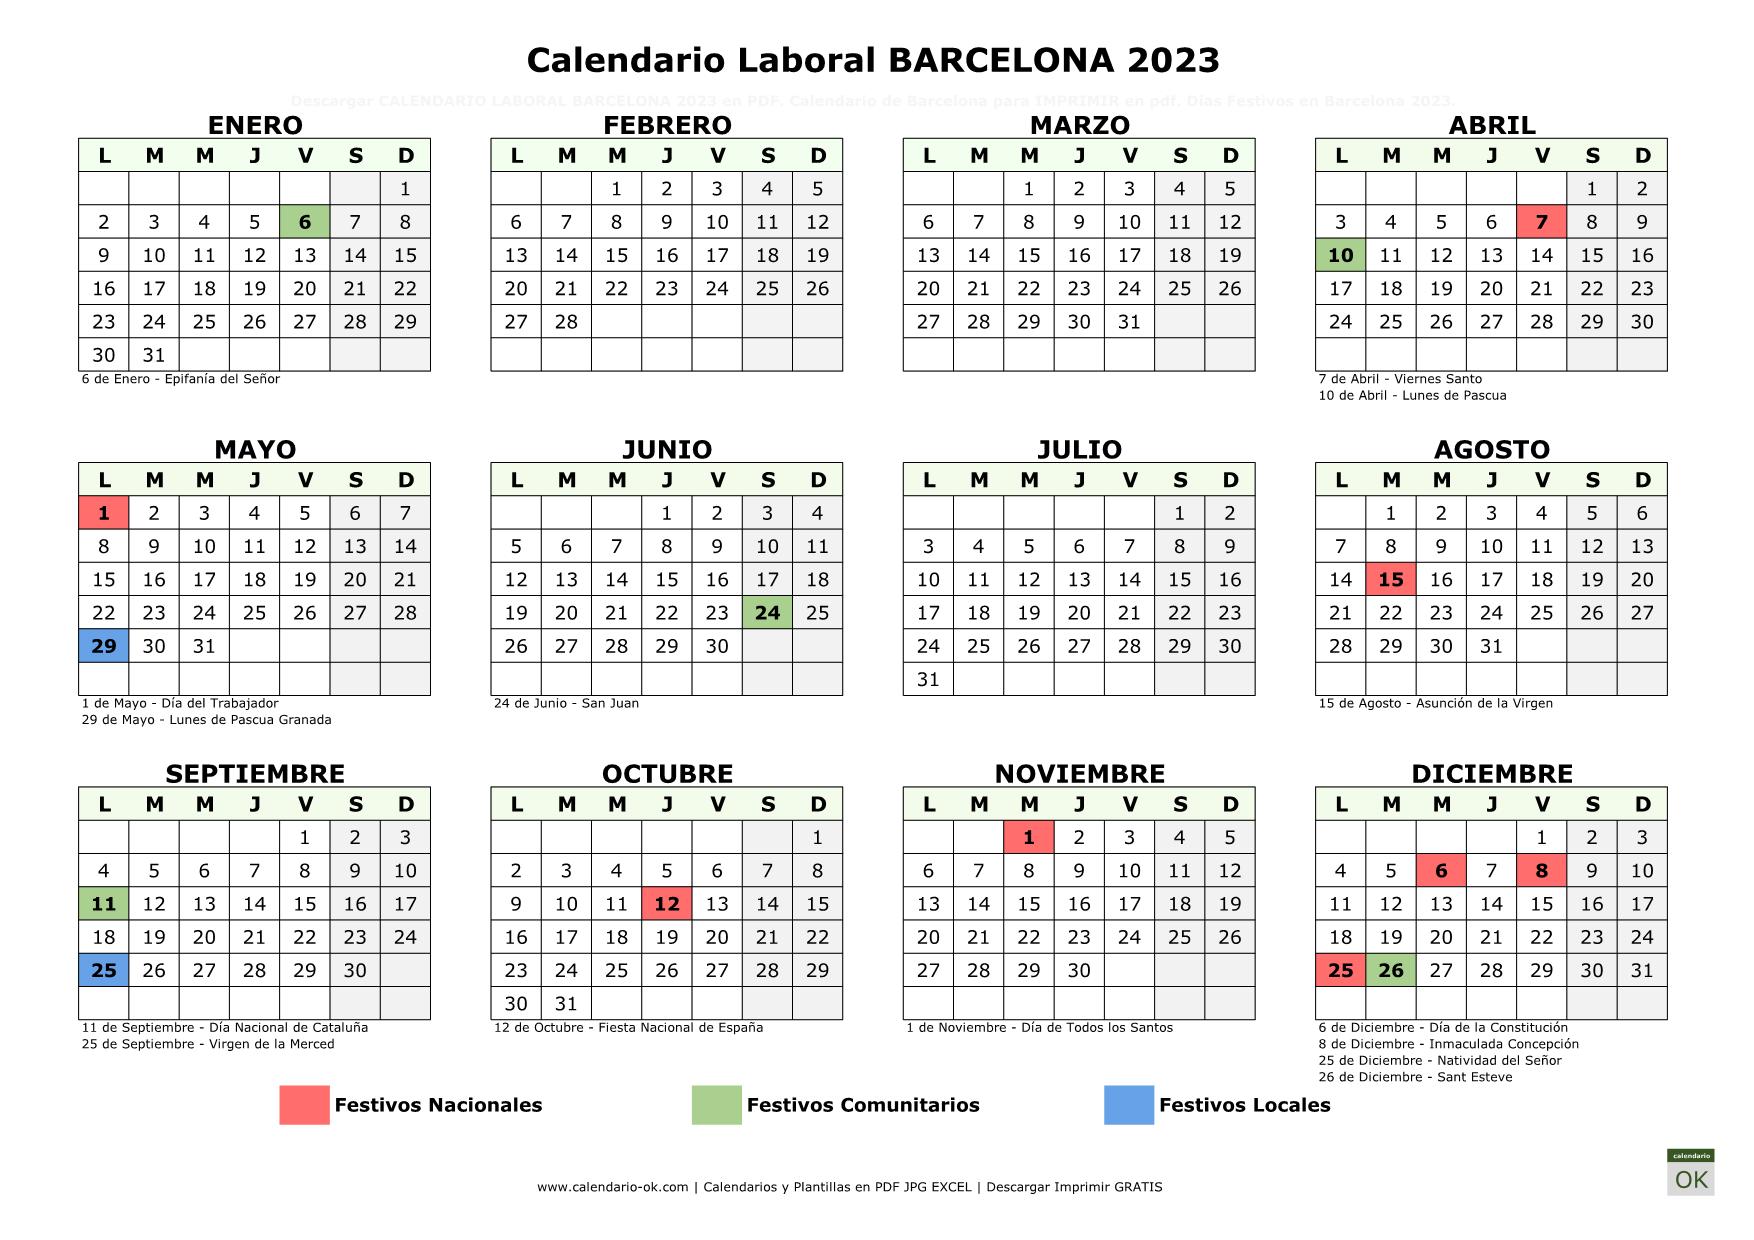 Calendario Laboral Barcelona 2023 horizontal